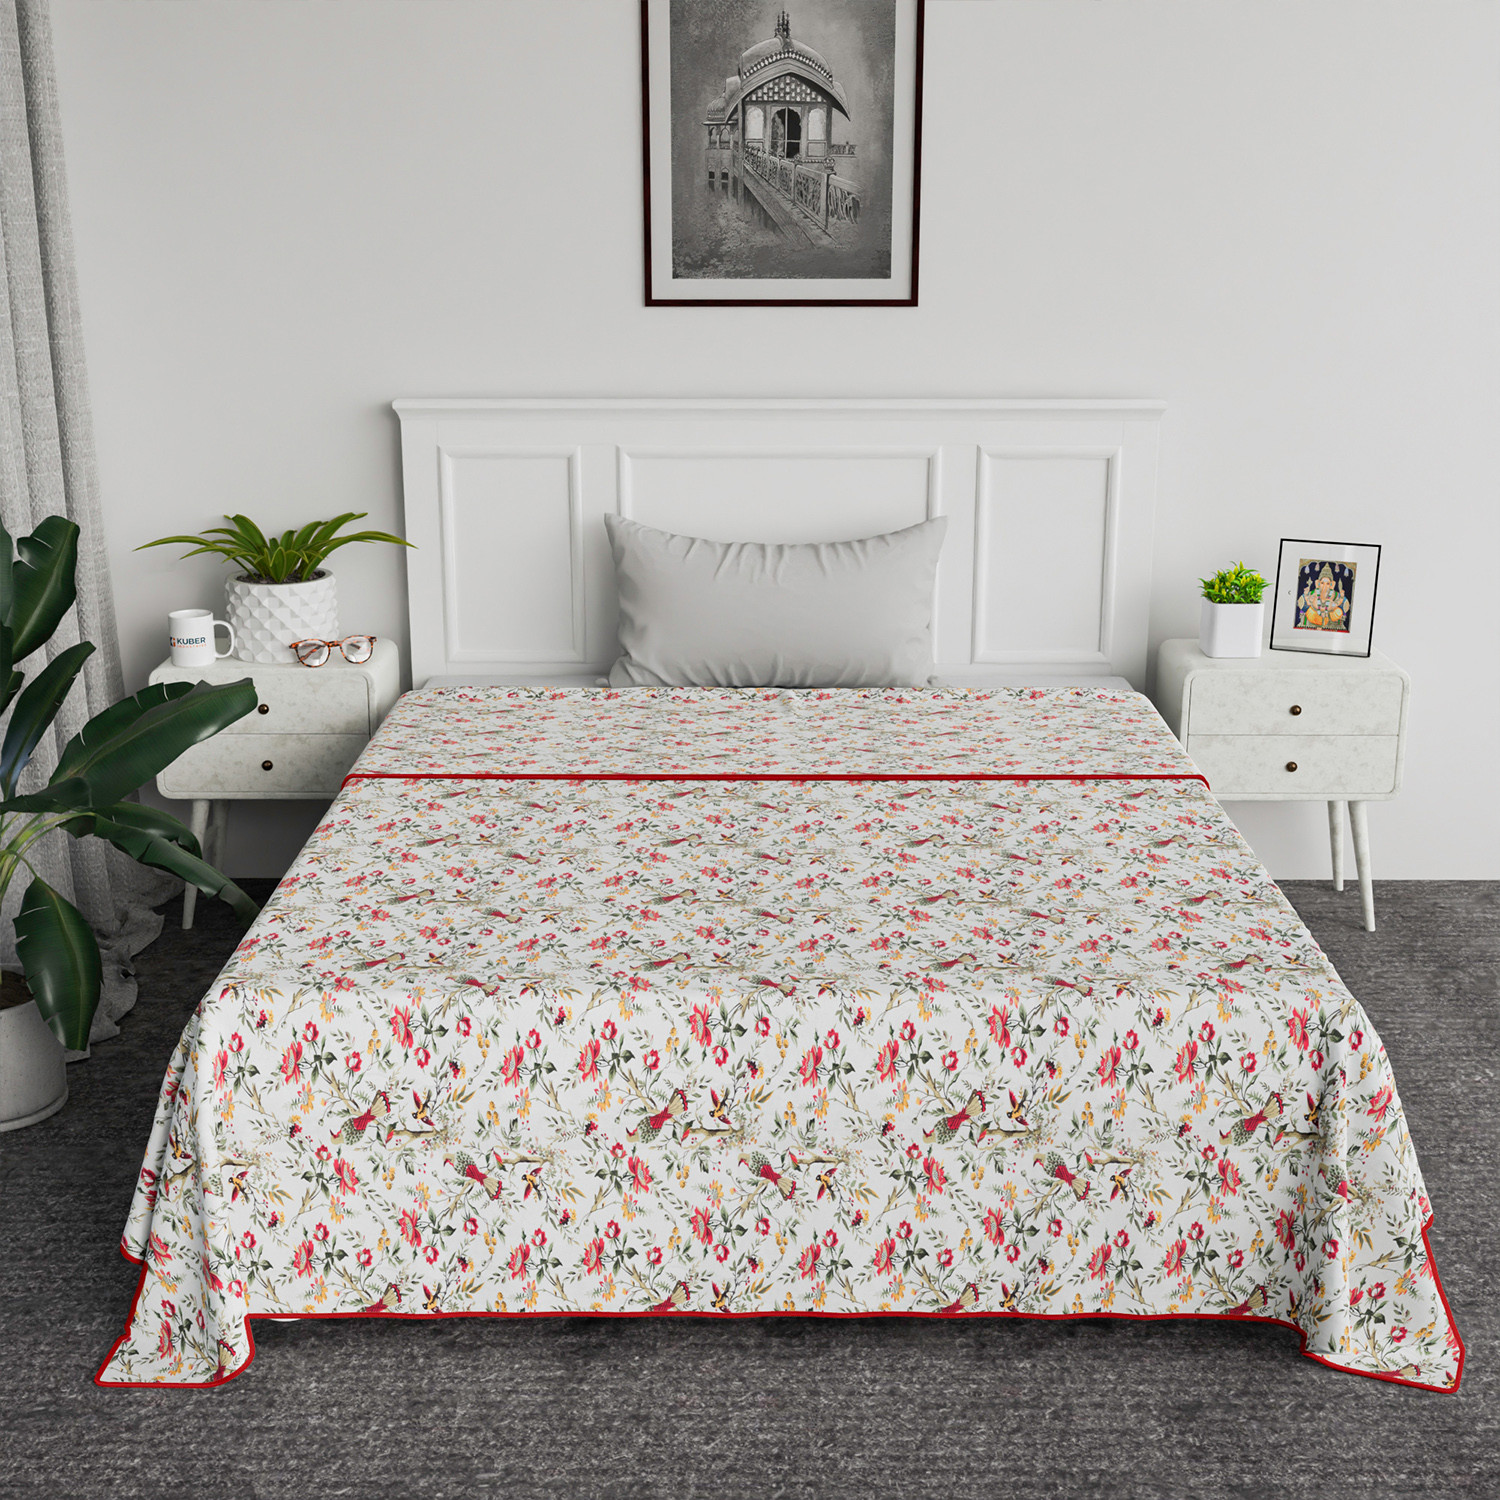 Kuber Industries Blanket | Cotton Single Bed Dohar | Blanket For Home | Reversible AC Blanket For Travelling | Blanket For Summer | Blanket For Winters | Leaf Print | Pink